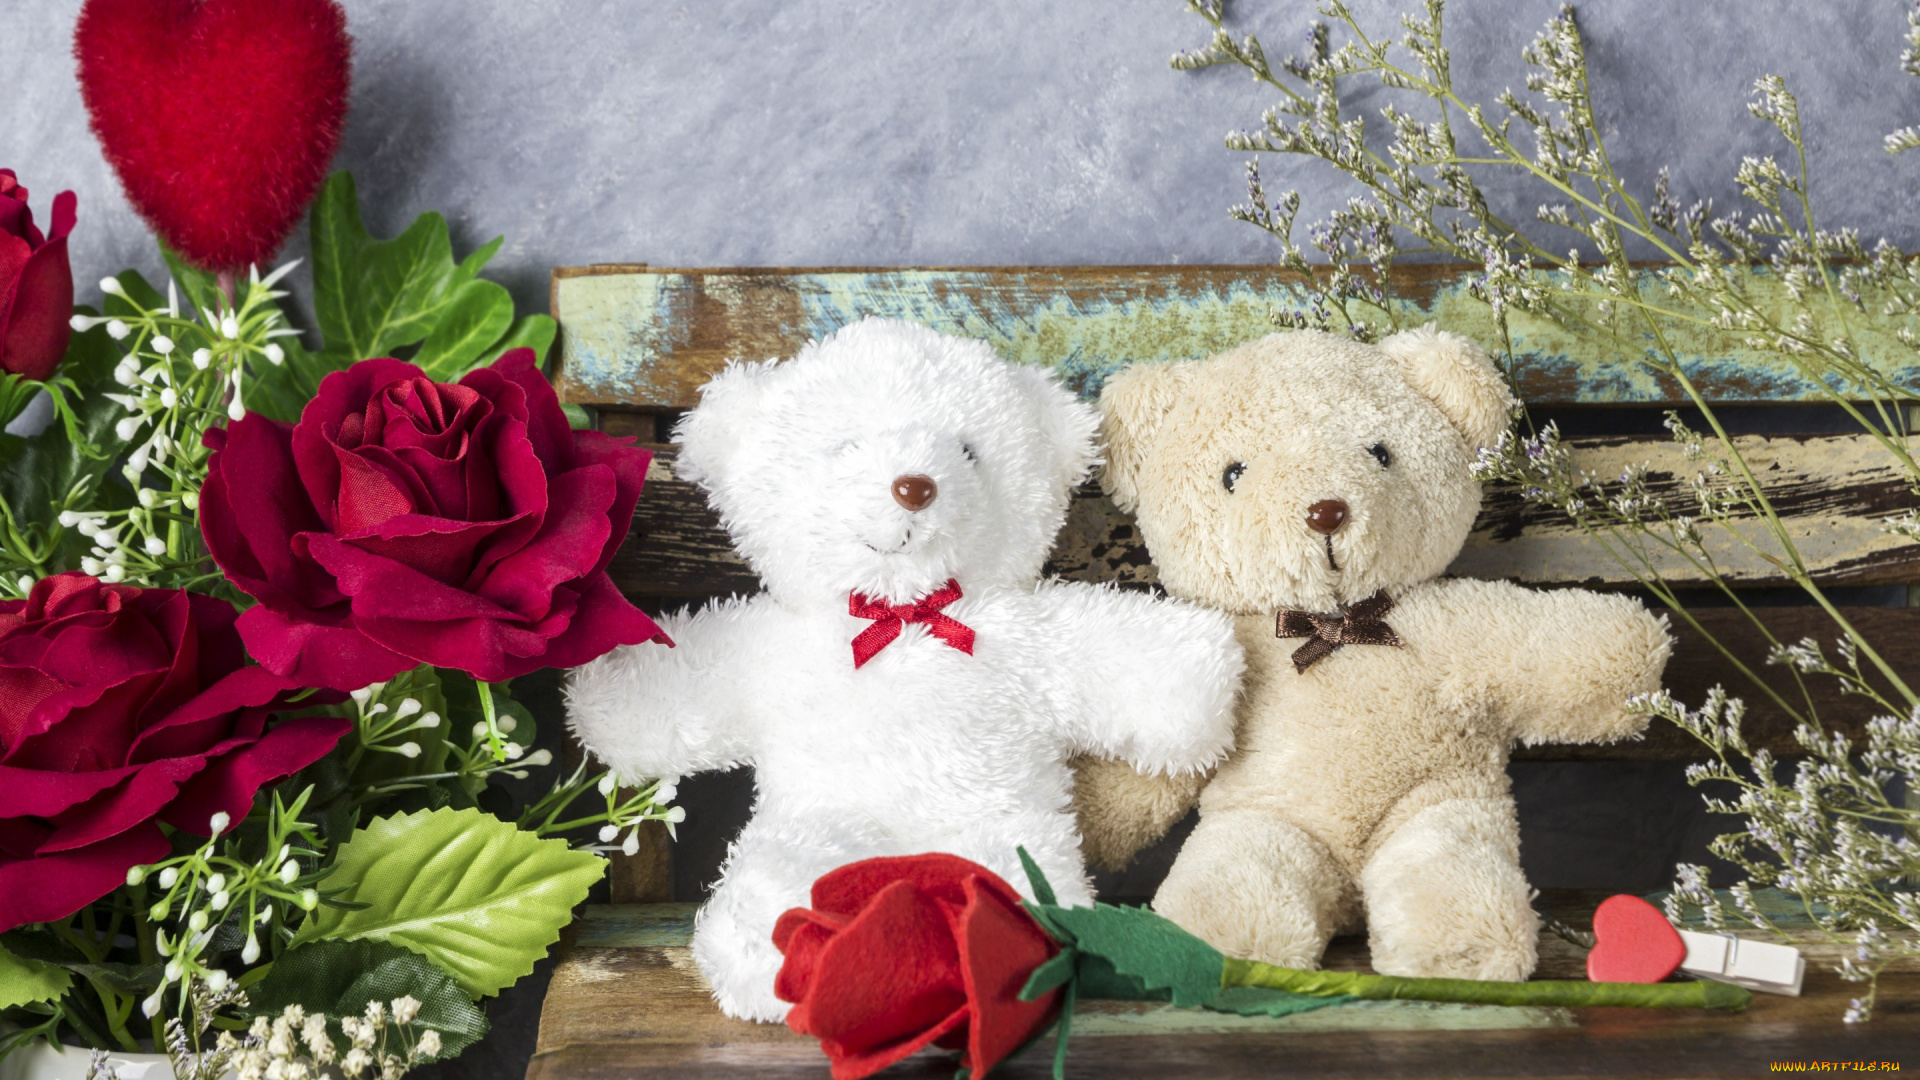 разное, игрушки, valentine's, day, любовь, love, wood, bear, cute, roses, heart, розовые, мишка, цветы, игрушка, red, teddy, flowers, подарок, сердце, gift, romantic, розы